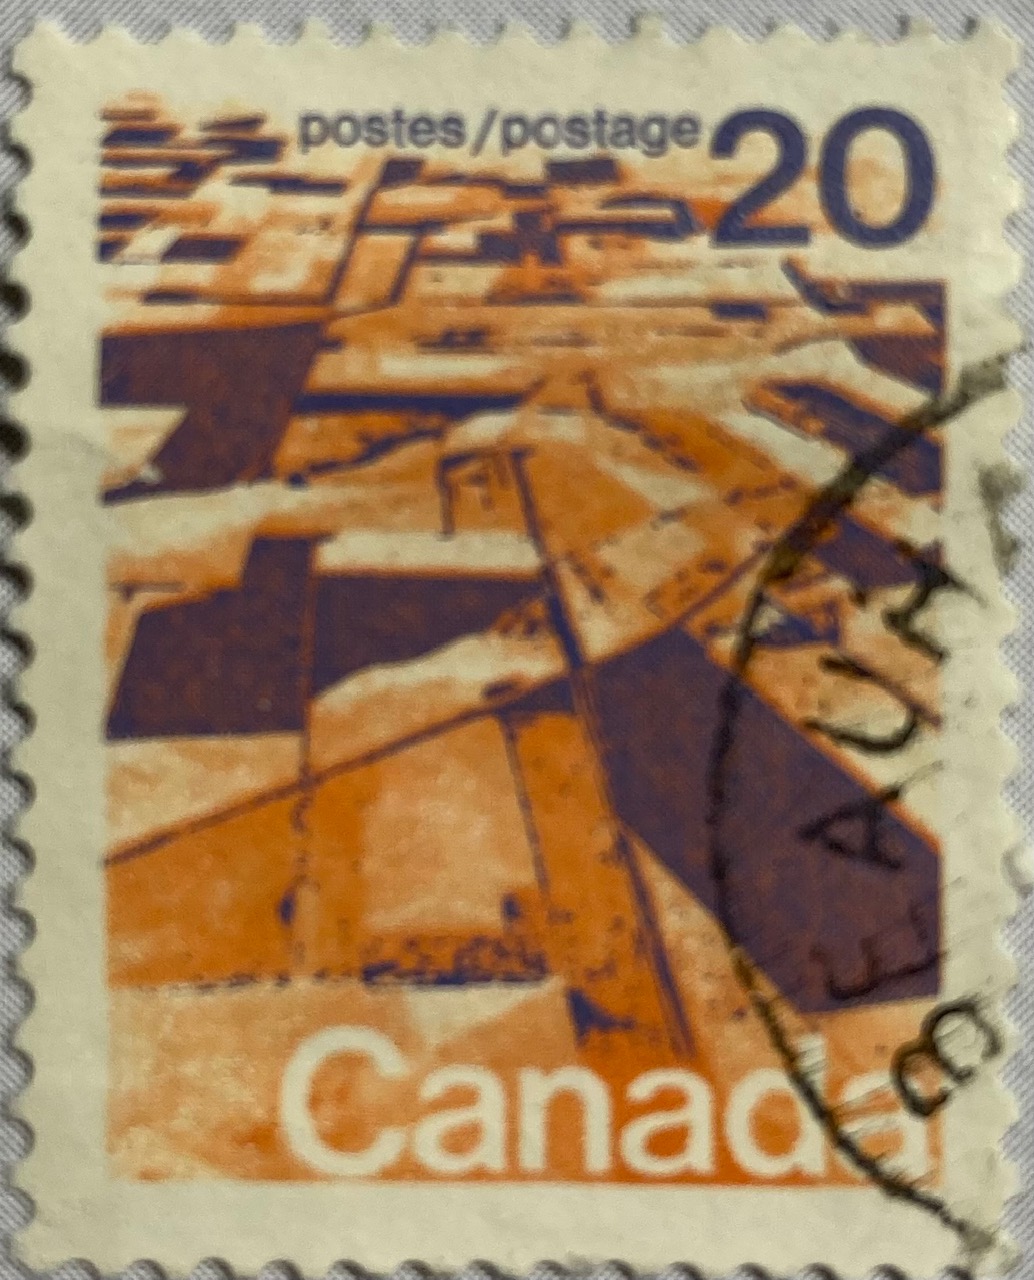 Canadian Stamp of Farmland